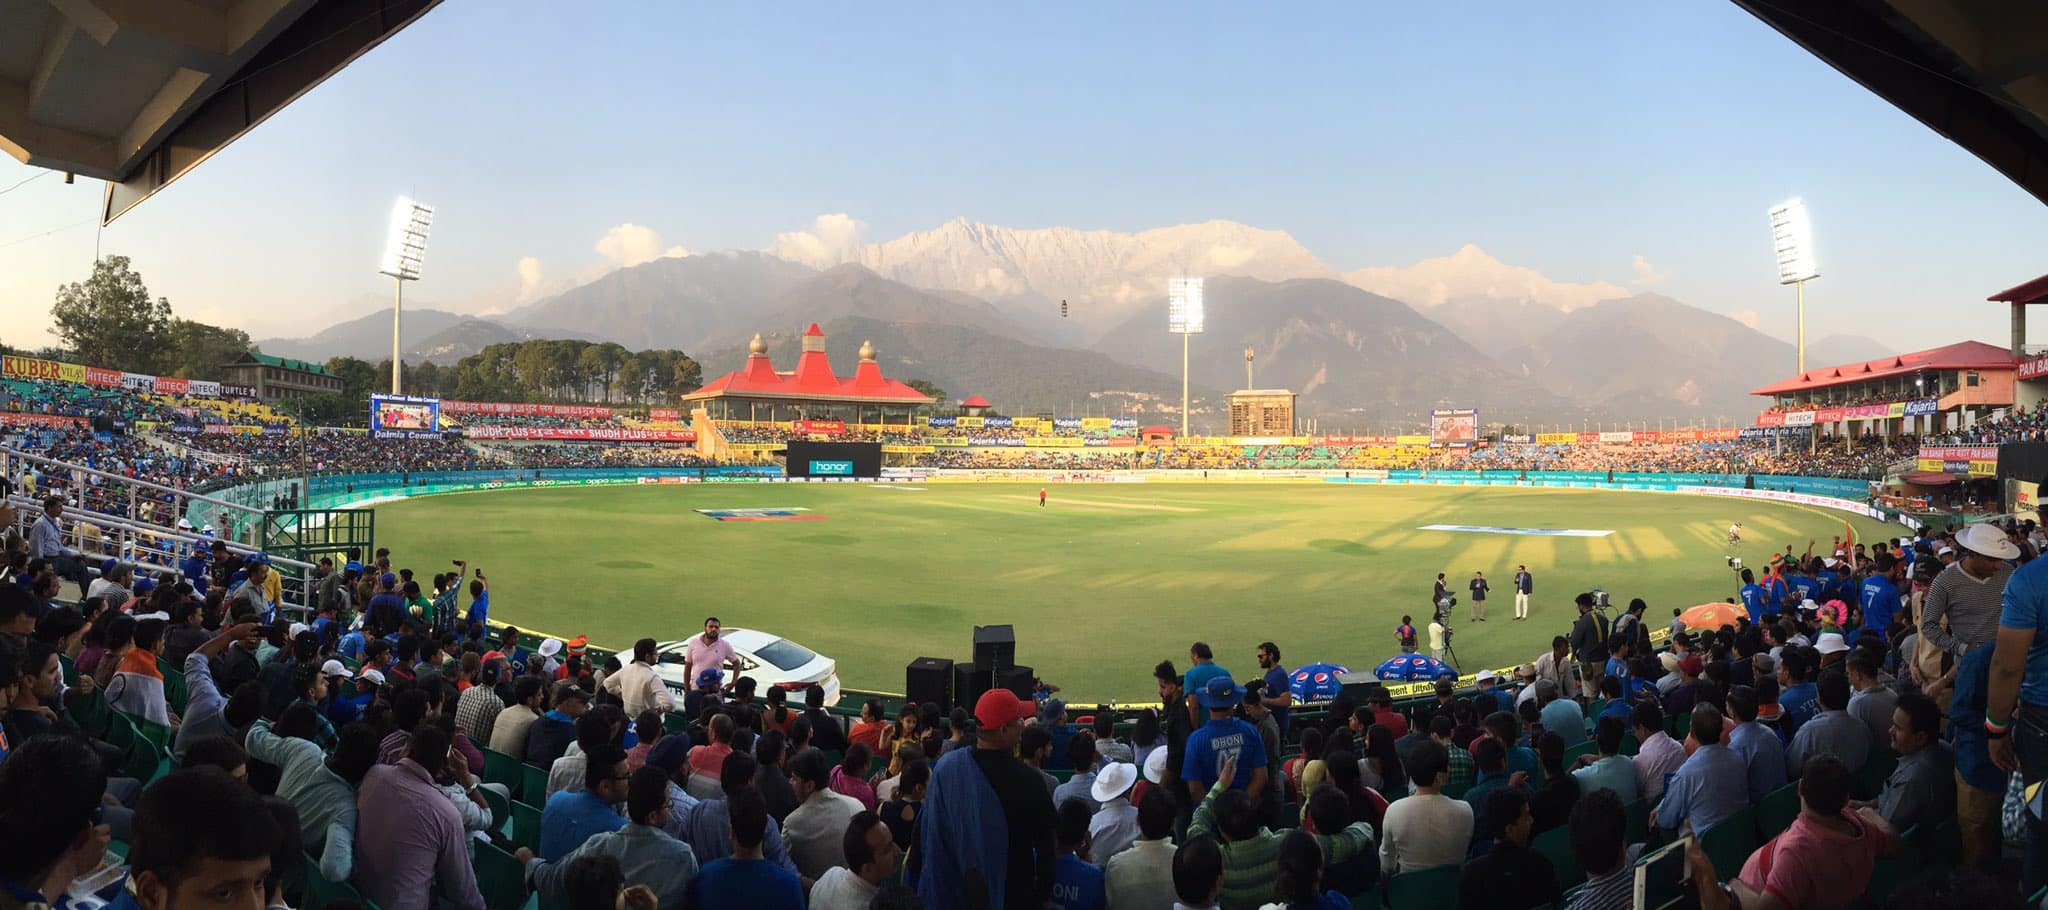 Know the IPL Stadium | Dharamsala Cricket Stadium - History, Ground Stats, Best IPL Match